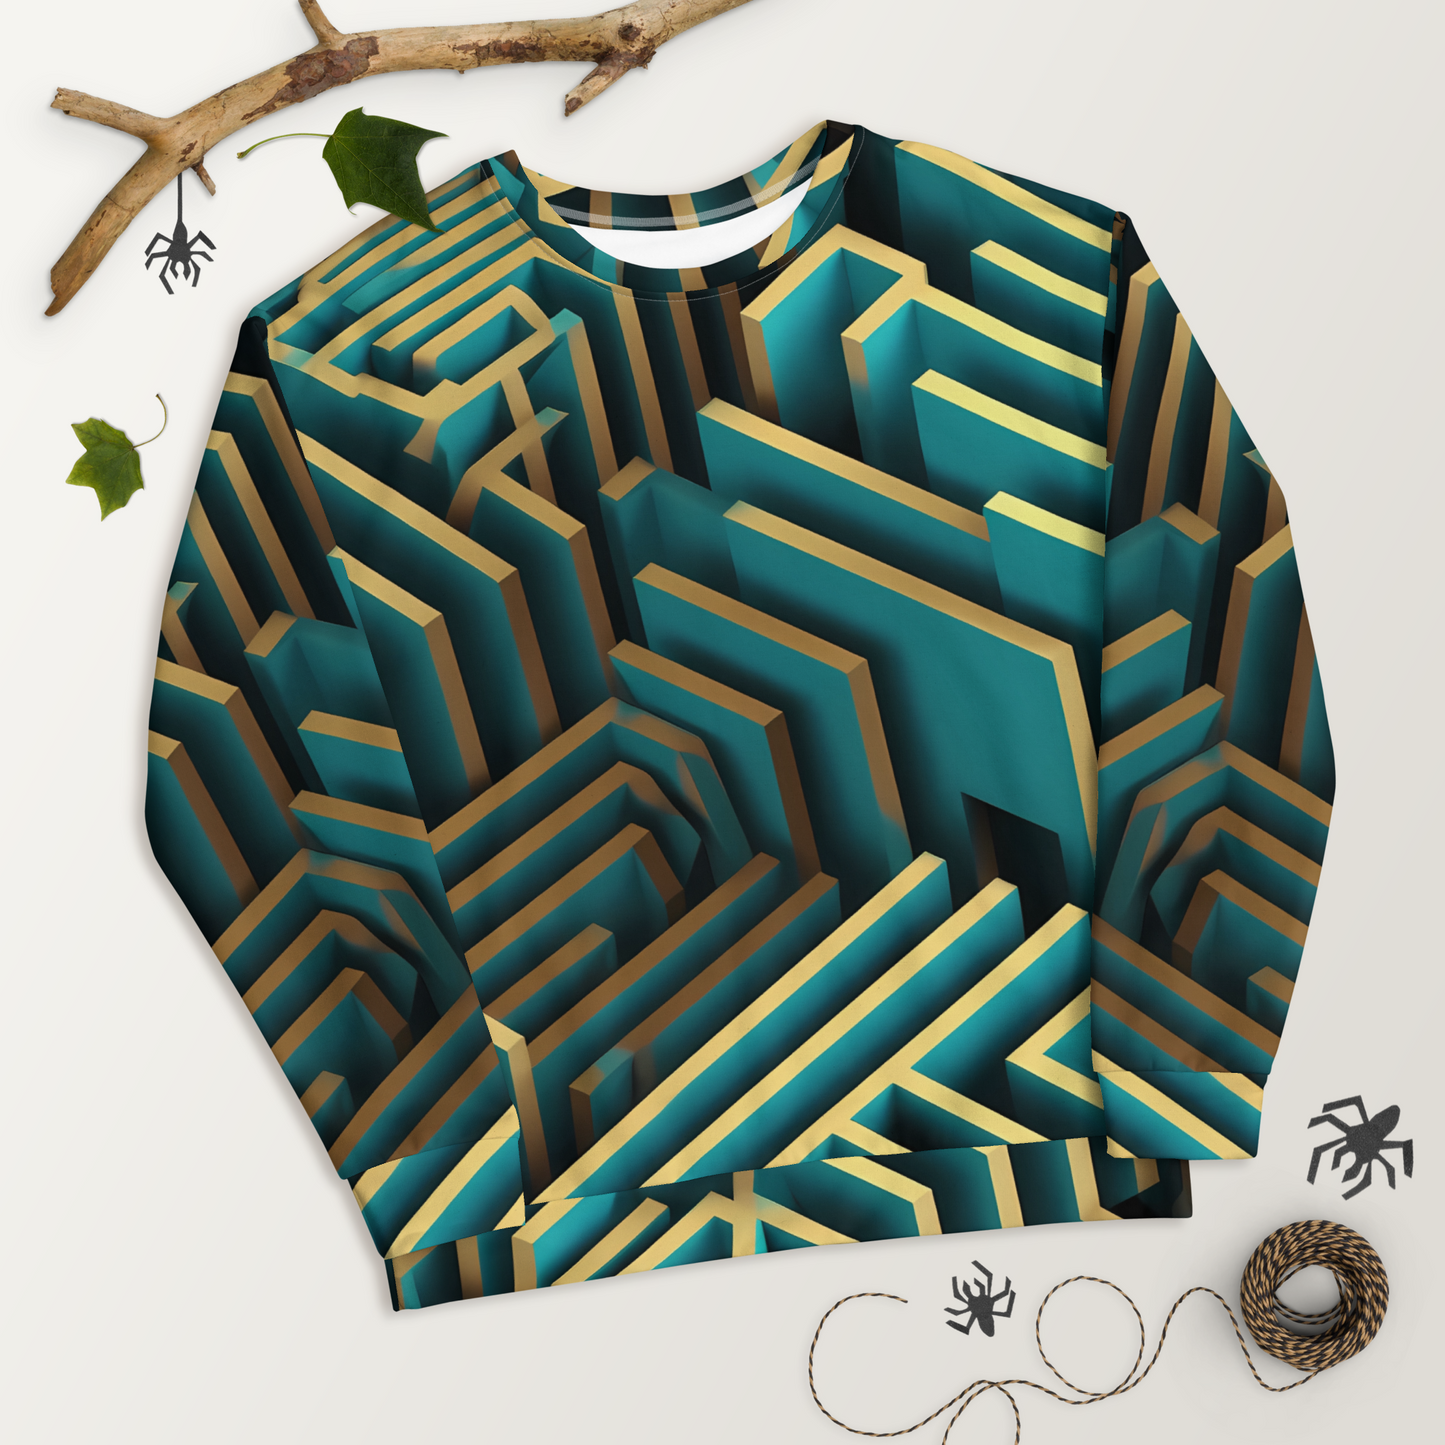 3D Maze Illusion | 3D Patterns | All-Over Print Unisex Sweatshirt - #5